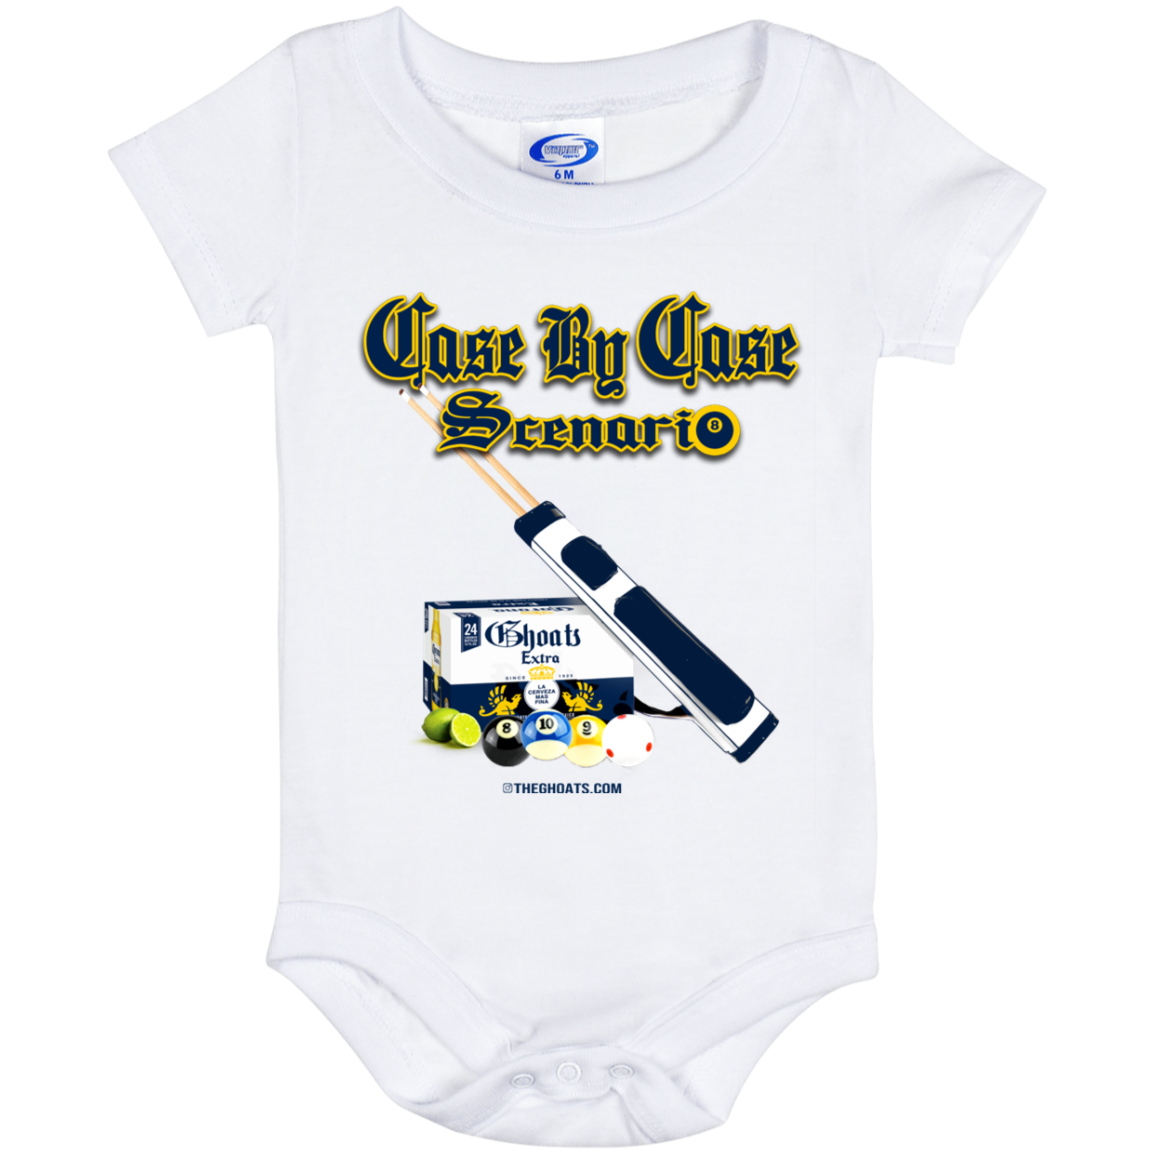 The GHOATS Custom Design. #6 Case by Case Scenario. Baby Onesie 6 Month